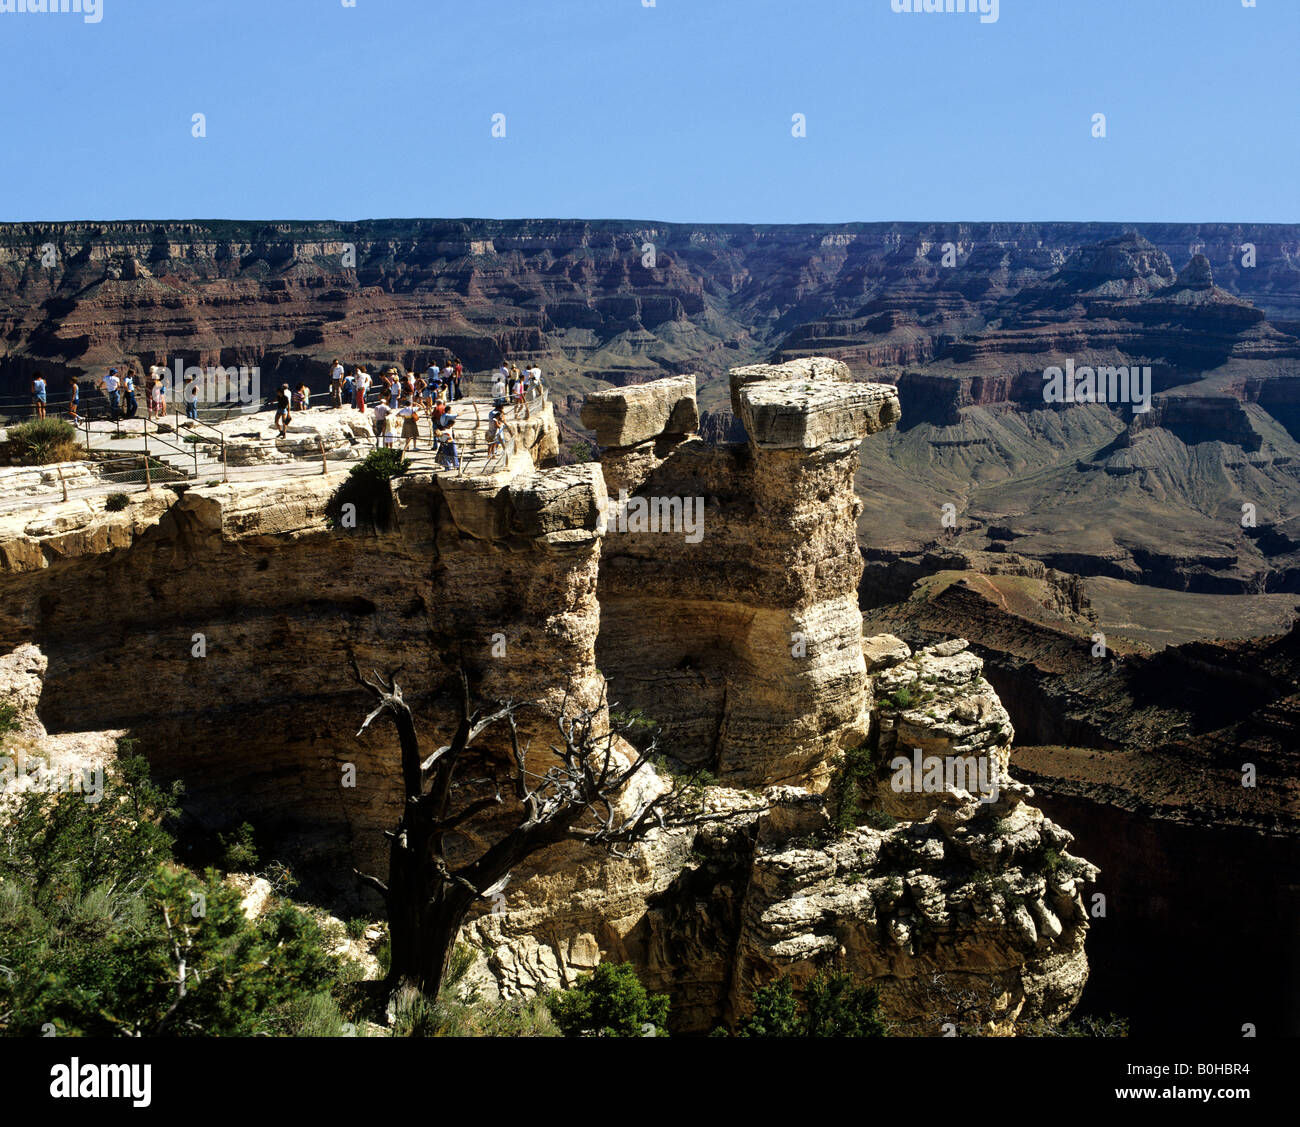 Il Grand Canyon, Lookout Point, Colorado Colorado Plateau, Arizona, Stati Uniti d'America Foto Stock